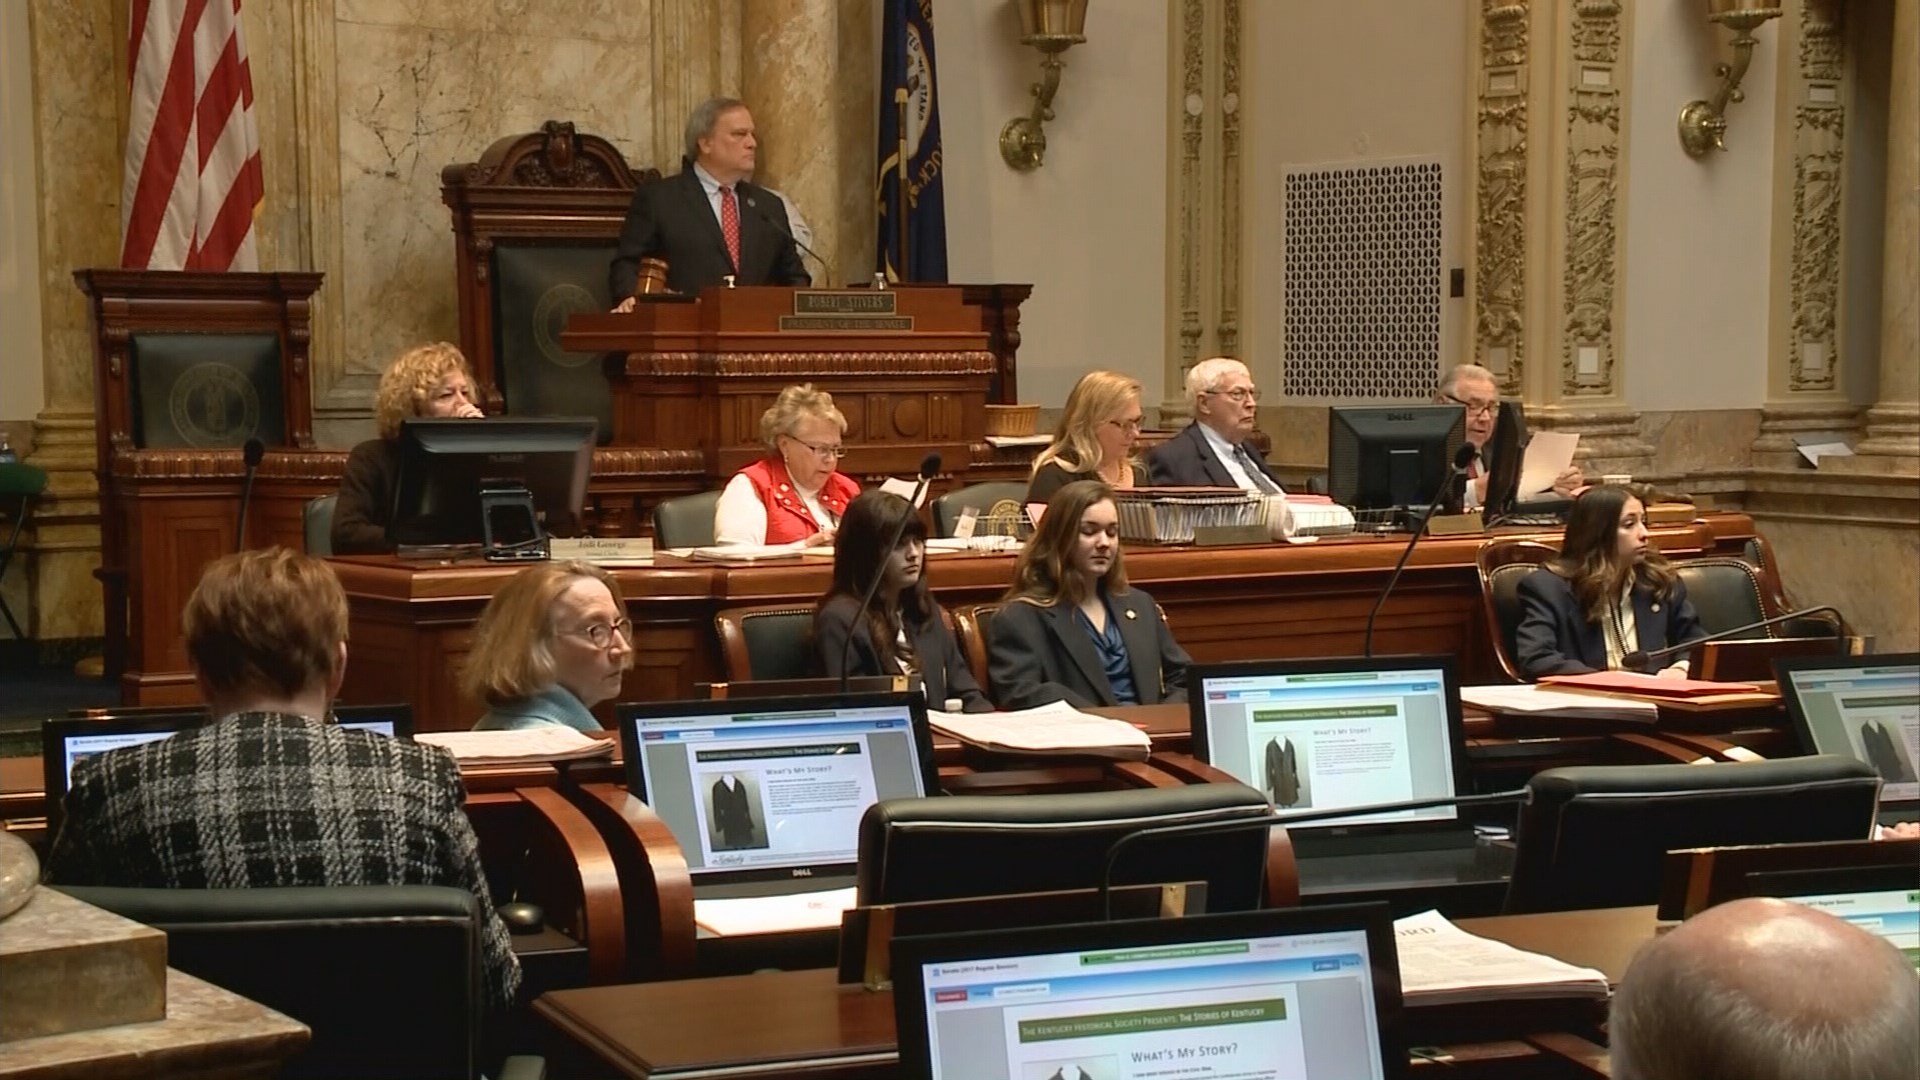 Charter schools bill clears Kentucky senate | WHAS11.com